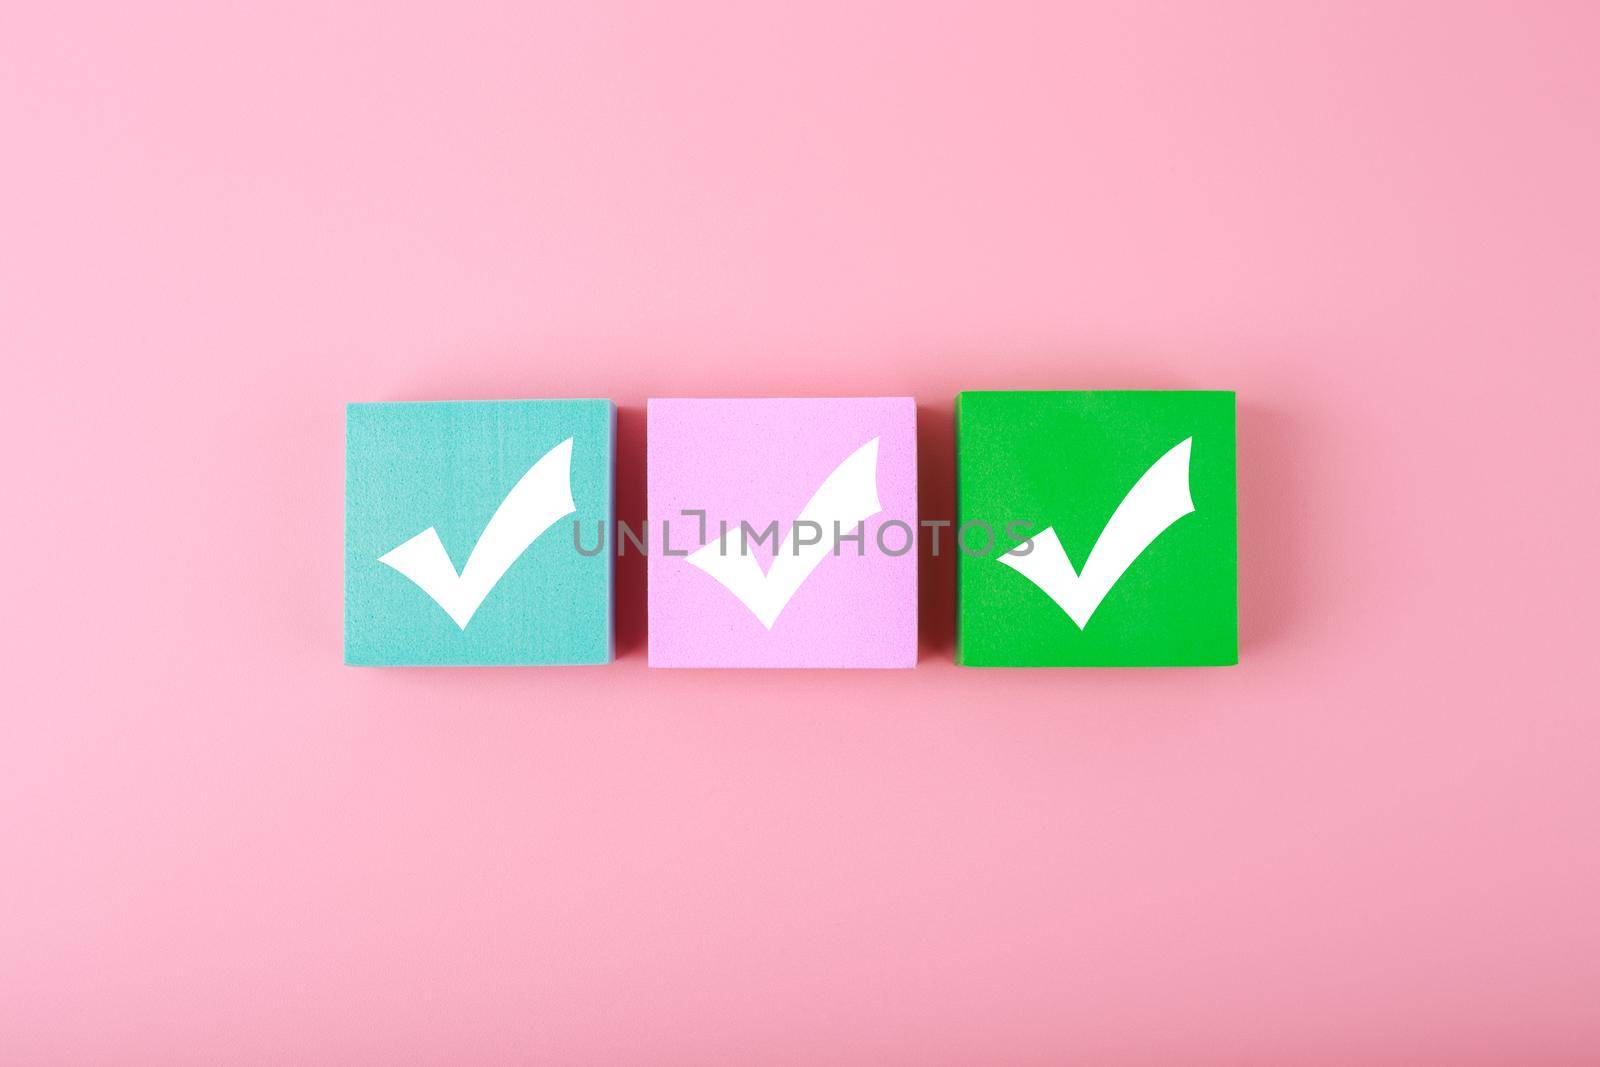 Three checkmarks on colorful blocks against pastel pink background  by Senorina_Irina